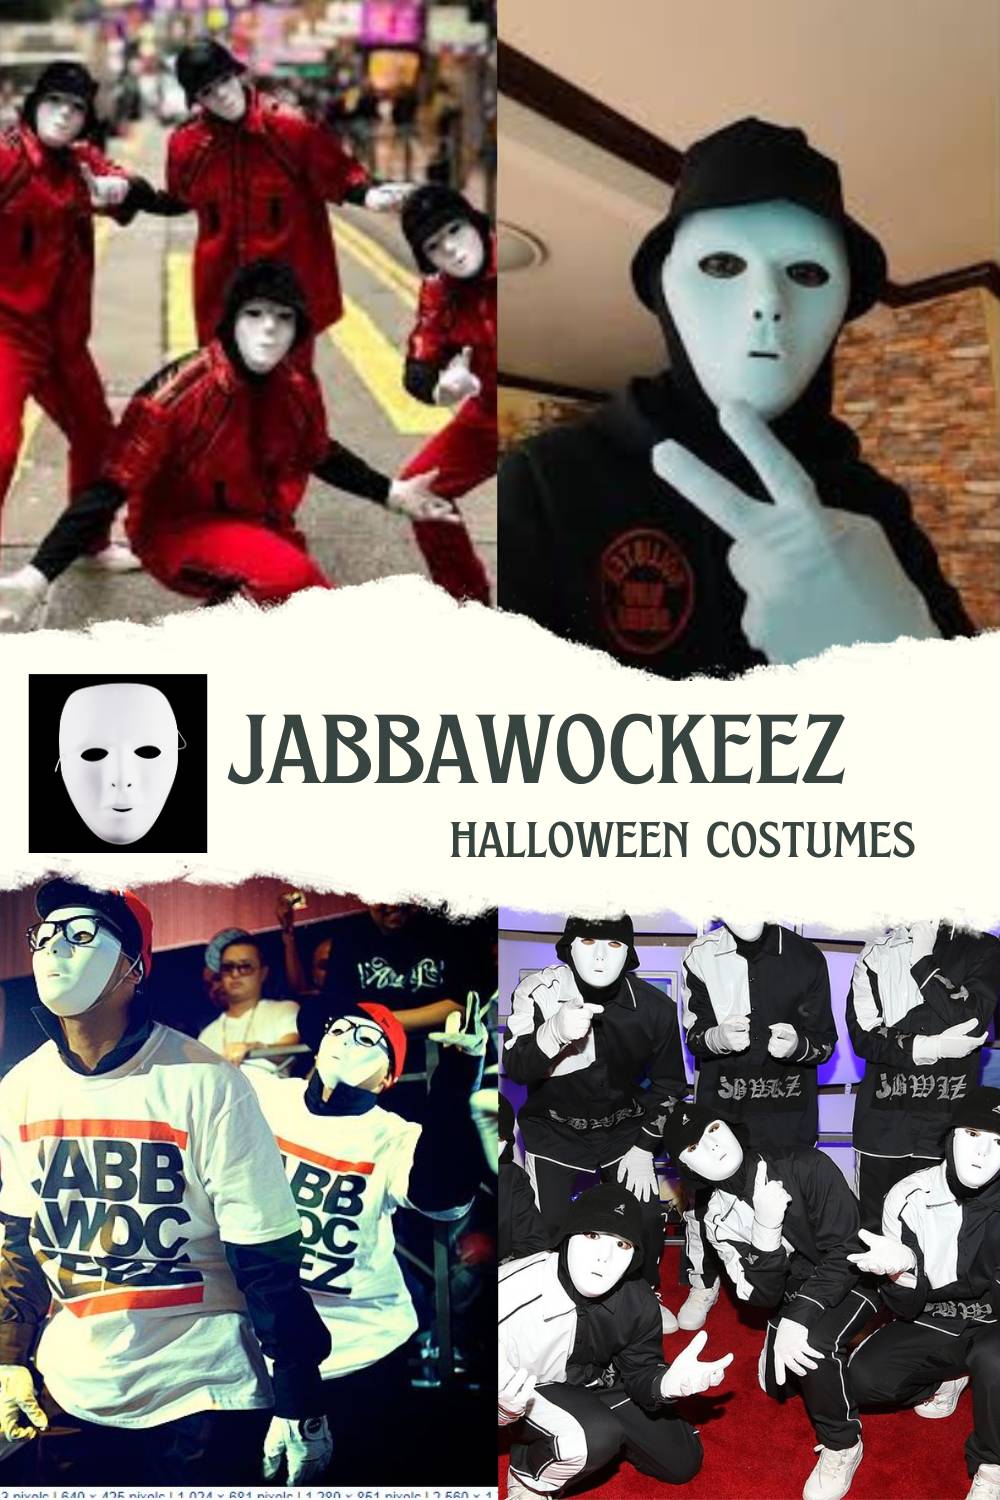 Lots of different Jabbawockeez Halloween costume ideas